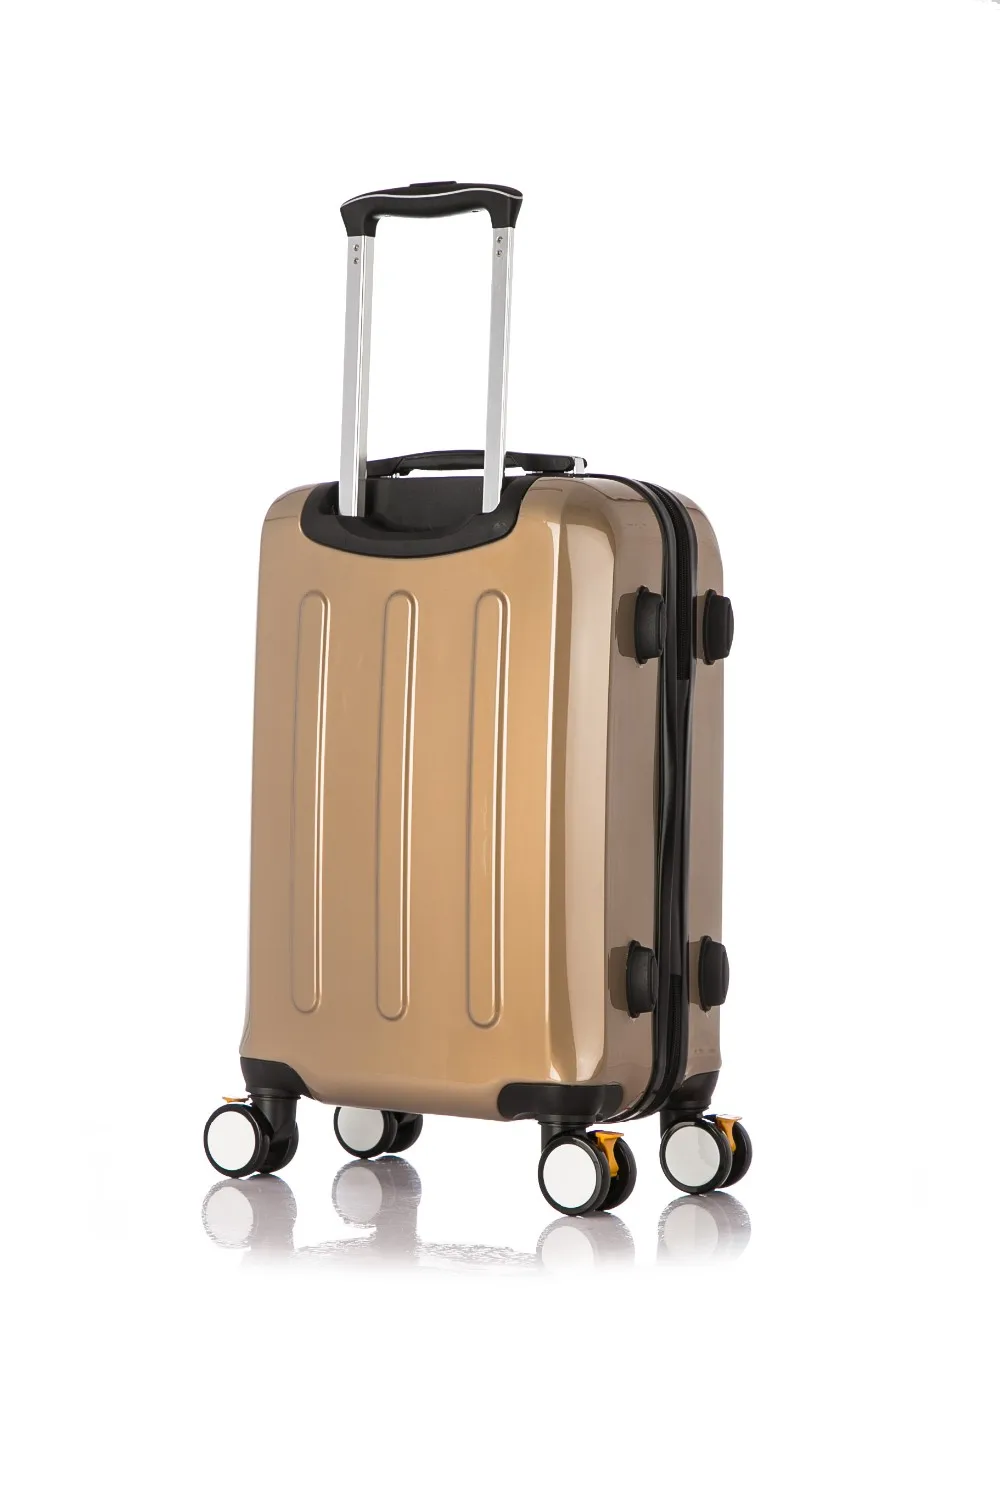 Goplus 3Pcs Luggage Set Lightweight Suitcase Hardside Travel Suitcase 20 24 28 ABS PC Travel Trolley Case w/Coded Lock Gray 